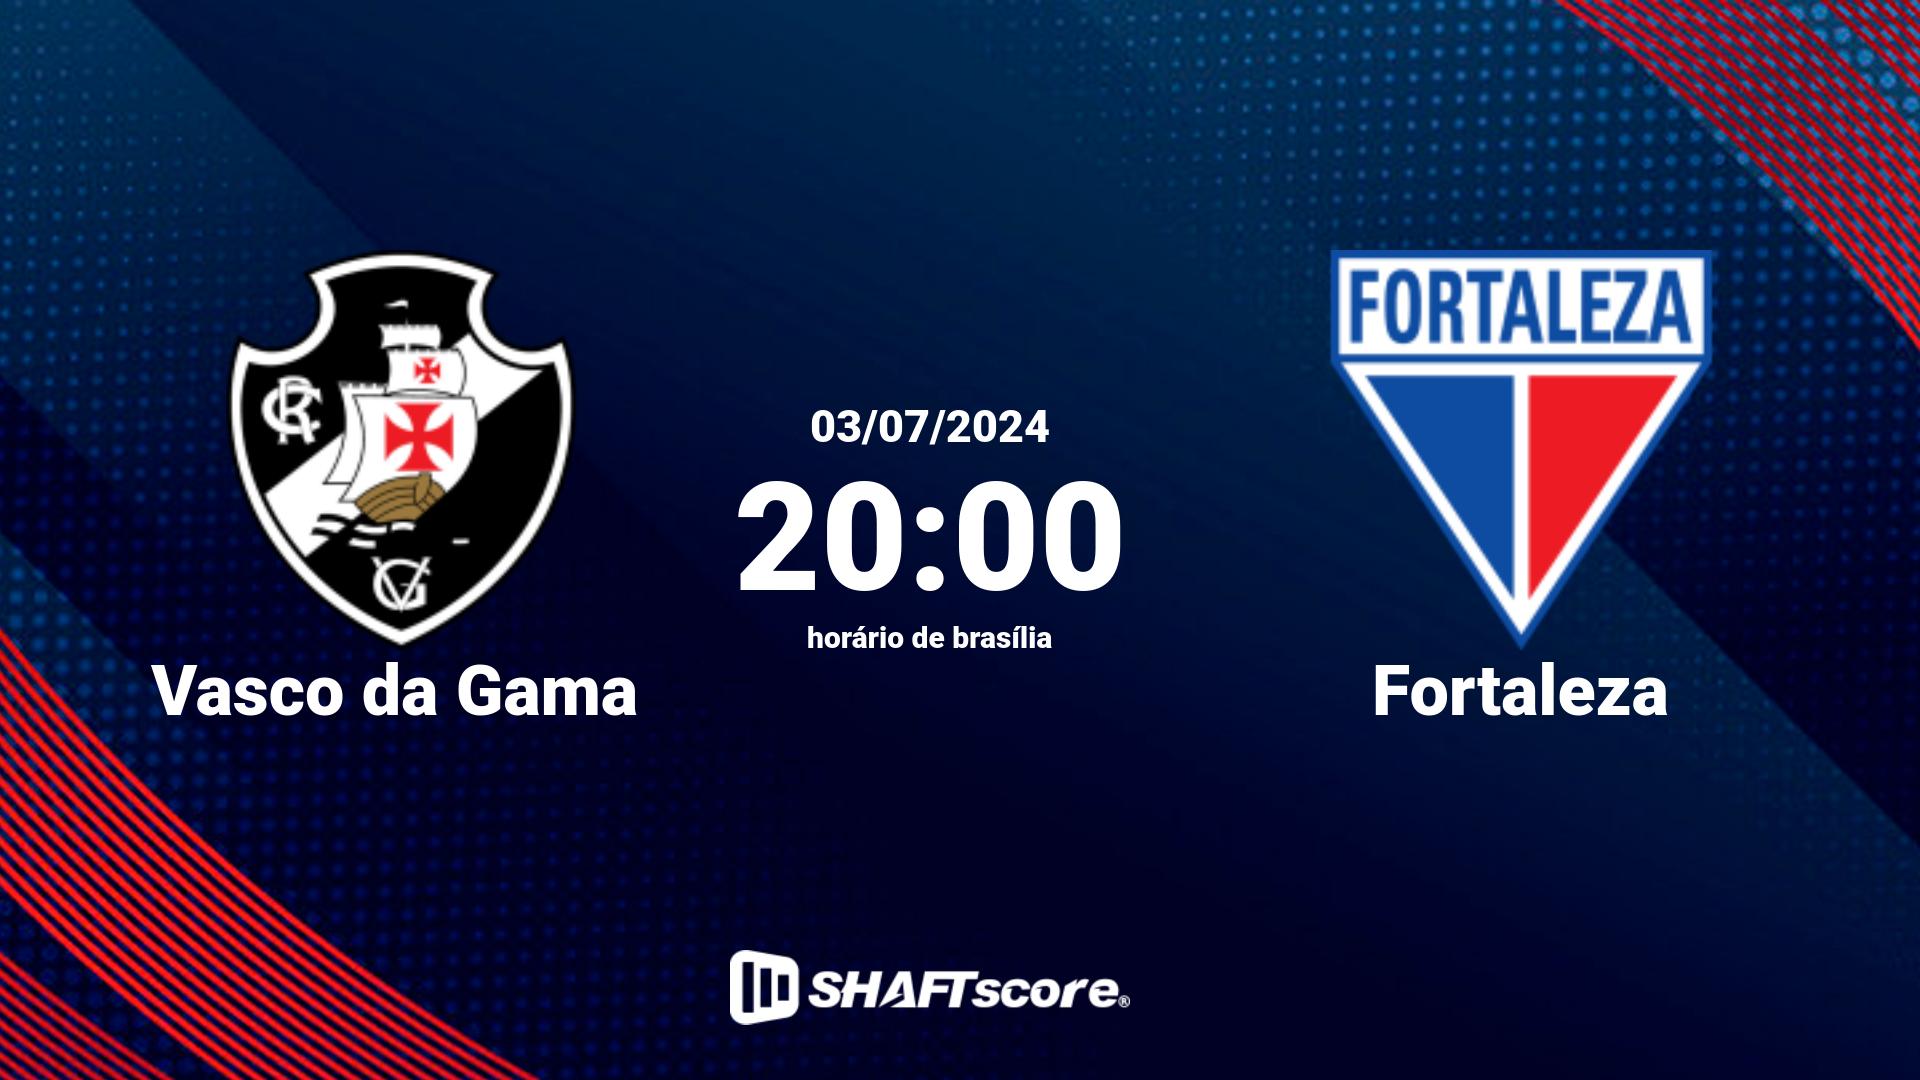 Estatísticas do jogo Vasco da Gama vs Fortaleza 03.07 20:00